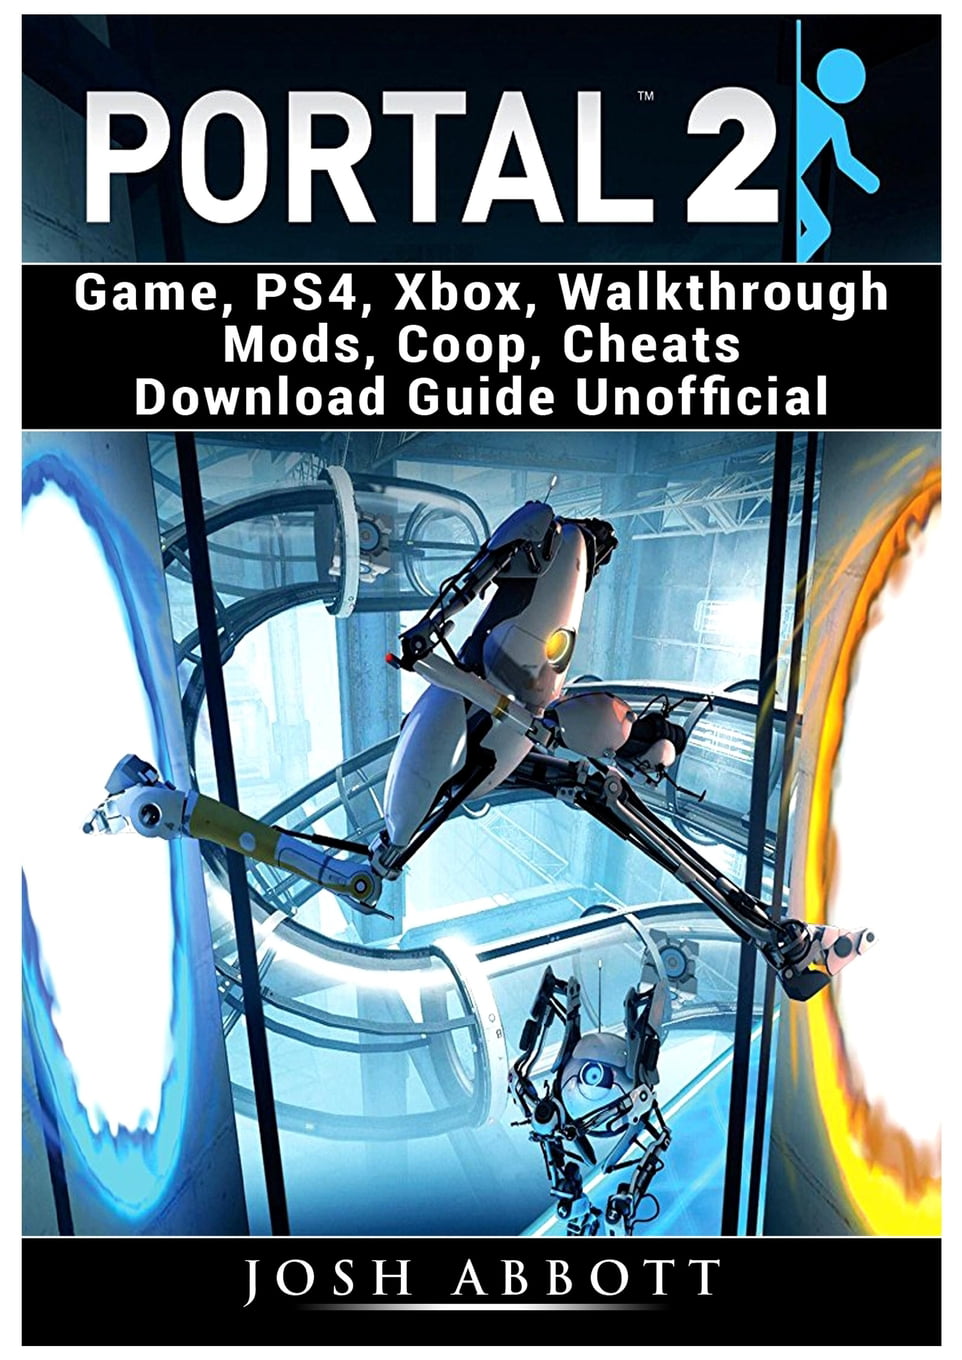 Portal 2 Game, Ps4, Xbox, Walkthrough Mods, Cheats Download Guide Unofficial (Paperback) - Walmart.com